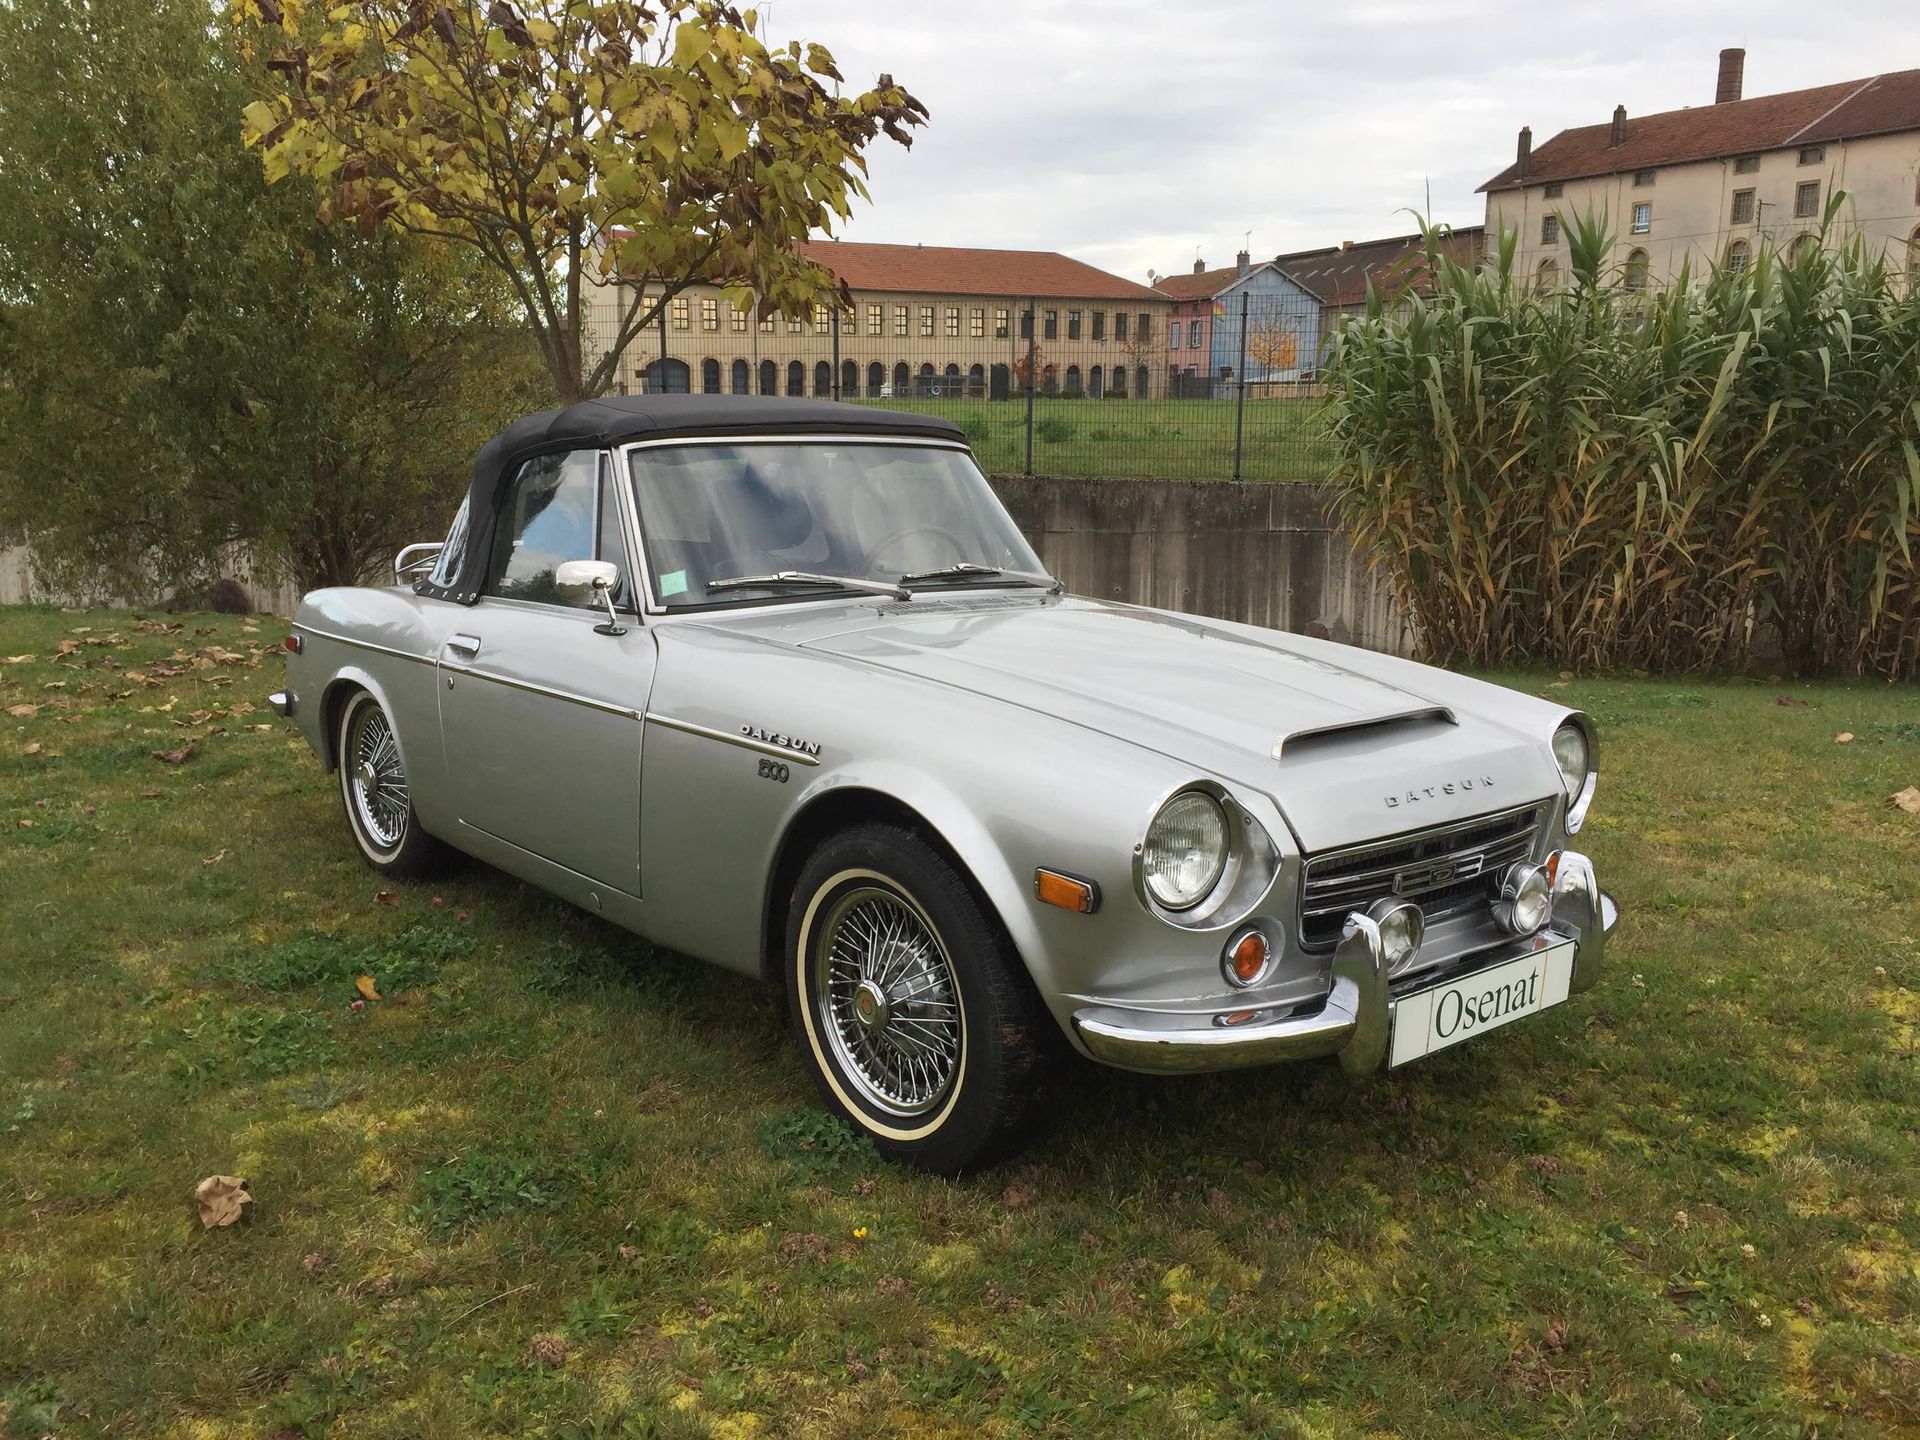 1968 Datsun Fairlady 1600运动型

SPL 311型

序列号：29777

法国收藏家证书

有效期不超过6个月的技术控制

在Dat&hellip;